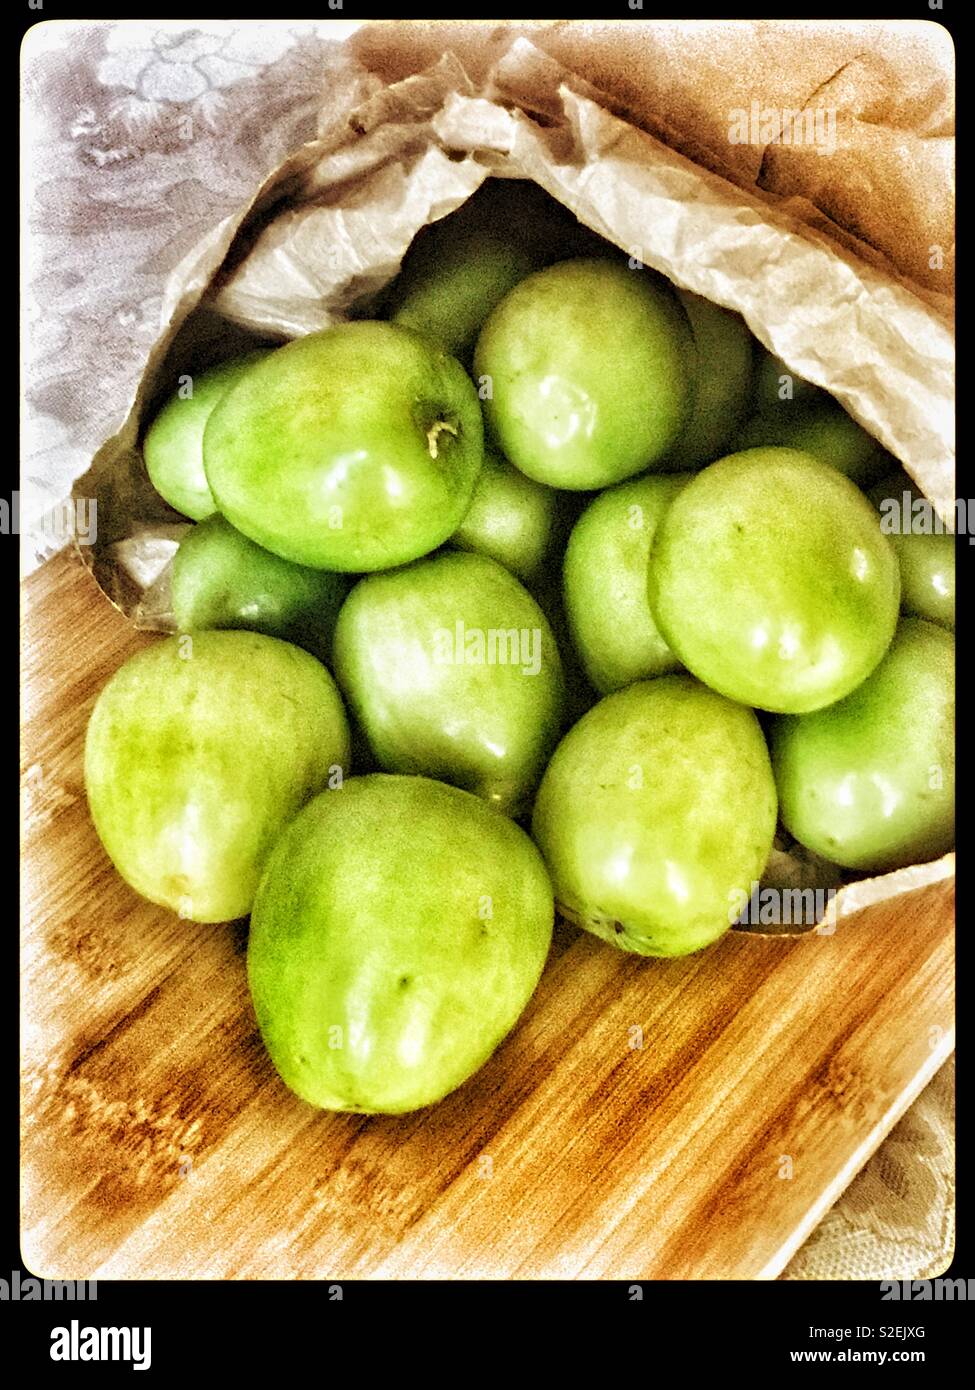 https://c8.alamy.com/comp/S2EJXG/chinese-apple-ziziphus-mauritiana-known-also-as-ber-kunazi-jujube-indian-plum-regi-pandu-belong-to-the-family-rhamnaceae-S2EJXG.jpg